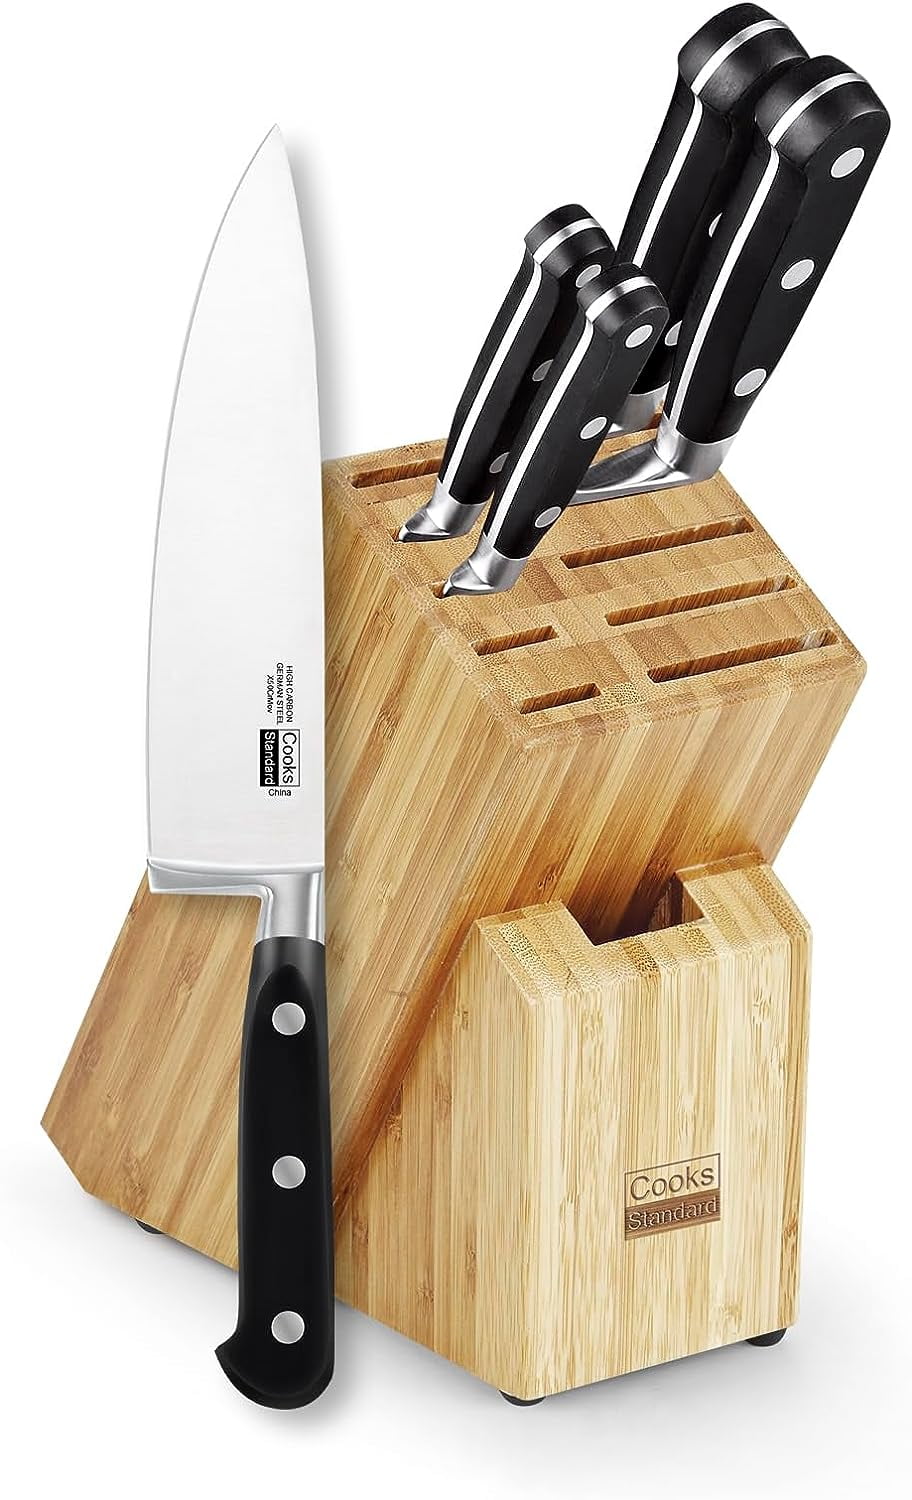 TopKnife Laguiole 6 Pcs Steak Knife Set - Stainless Steel Handle - Pine Wood Block